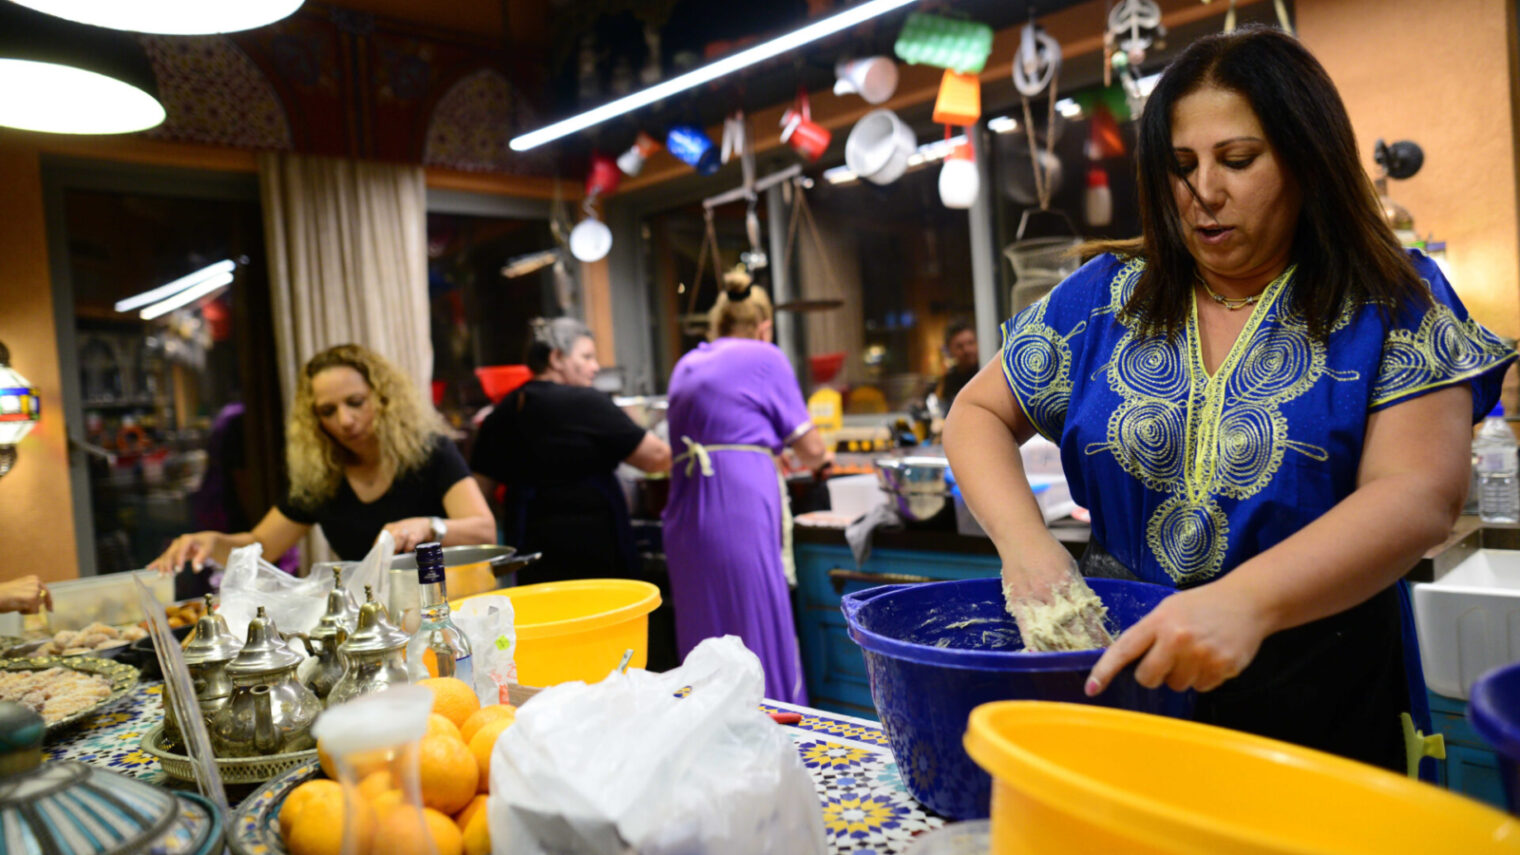 Members of the Turgeman Family prepare food at a Mimuna festival in Jaffa. Photo by Tomer Neuberg/Flash90